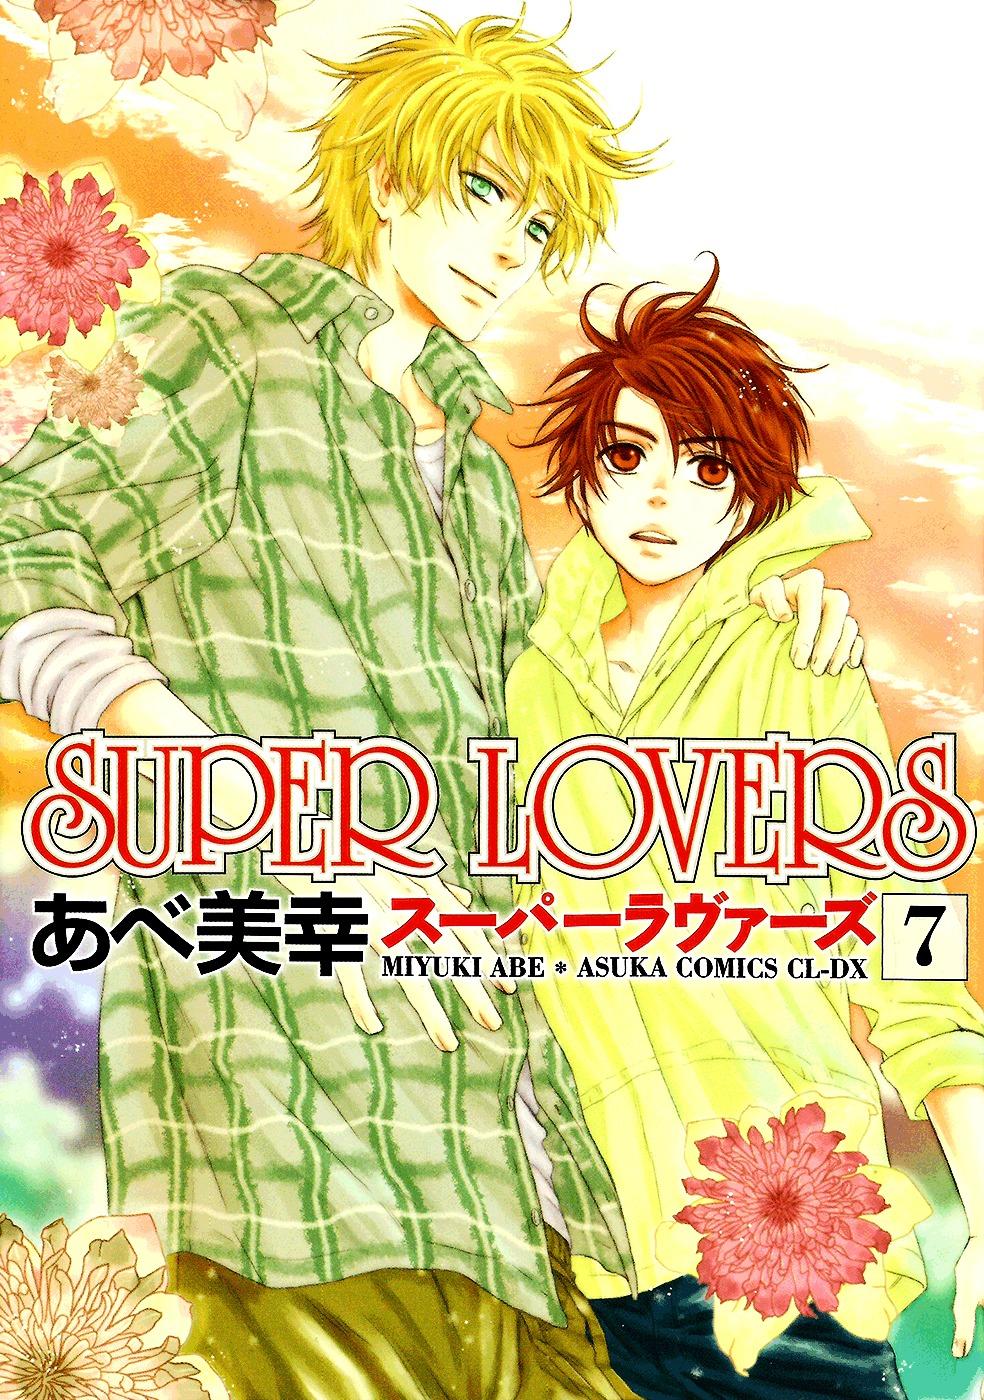 Read super lovers manga